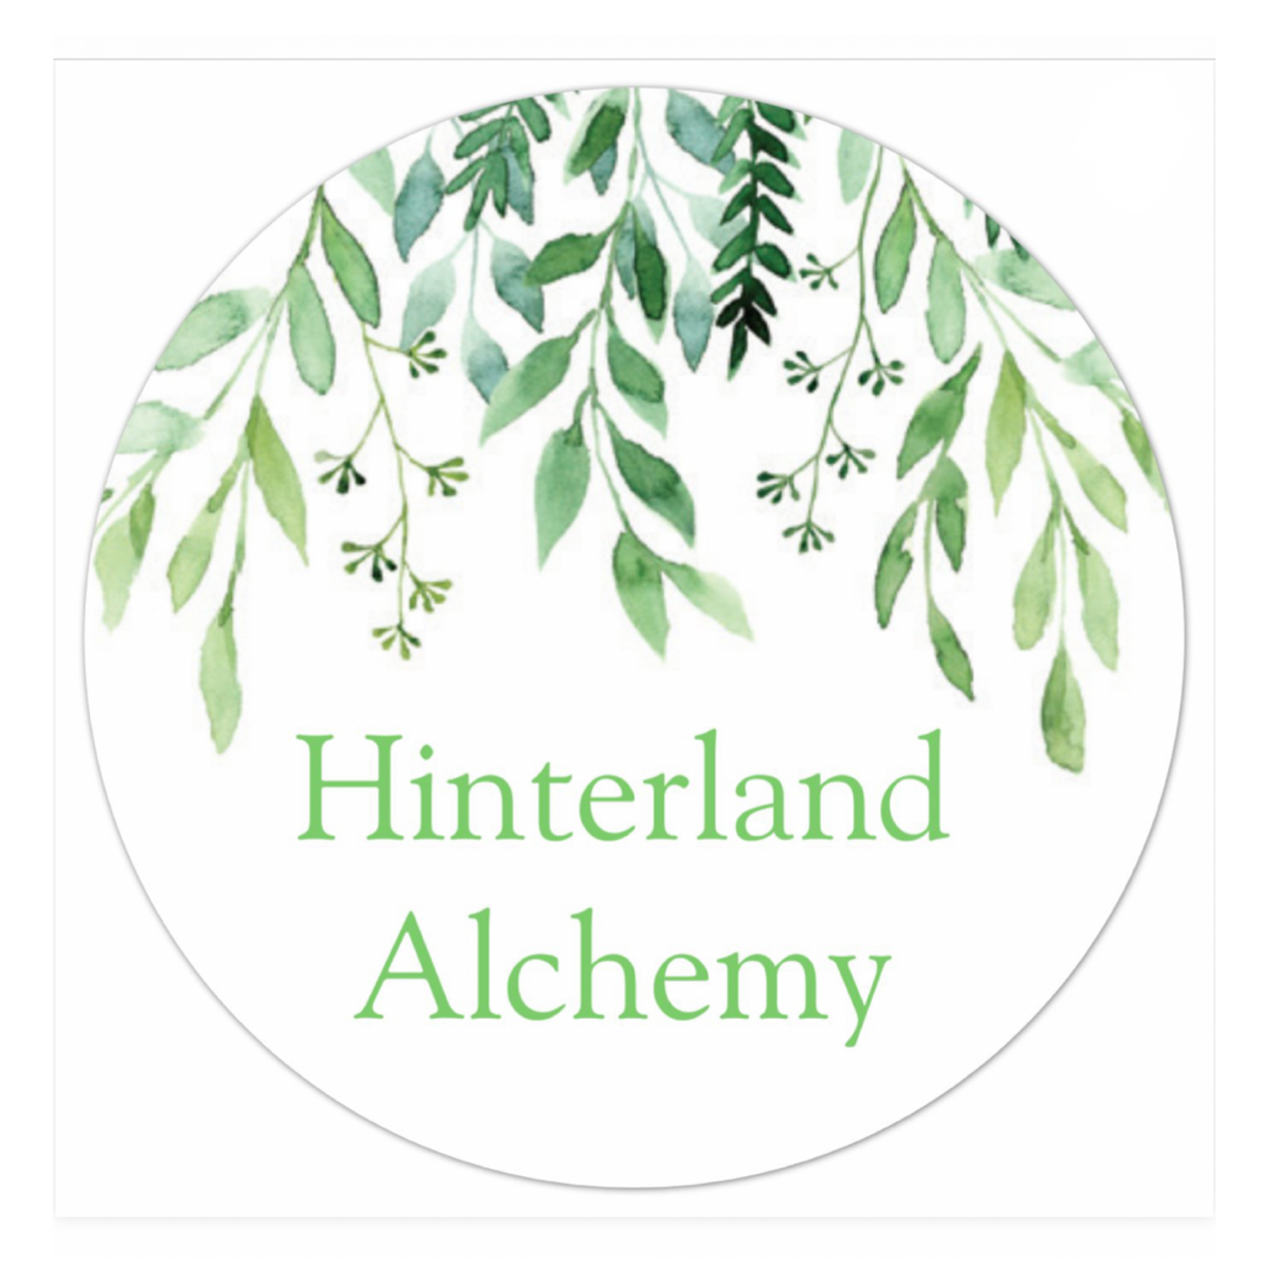 Hinterland Alchemy